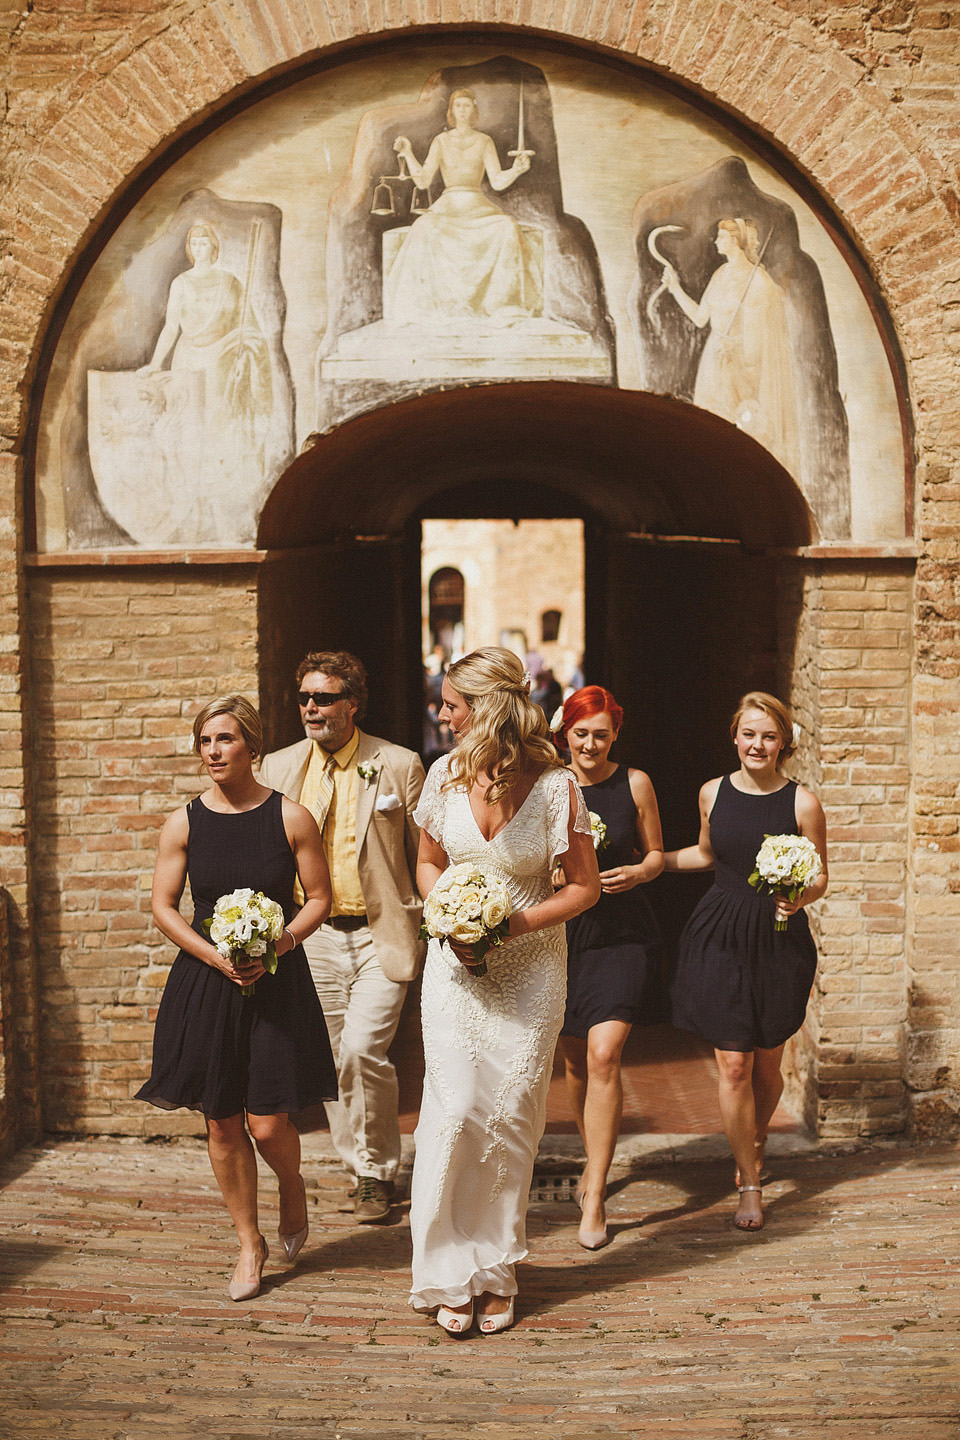 ed peers photography, eliza jane howell wedding dress, destination wedding, tuscany wedding, weddings in italy